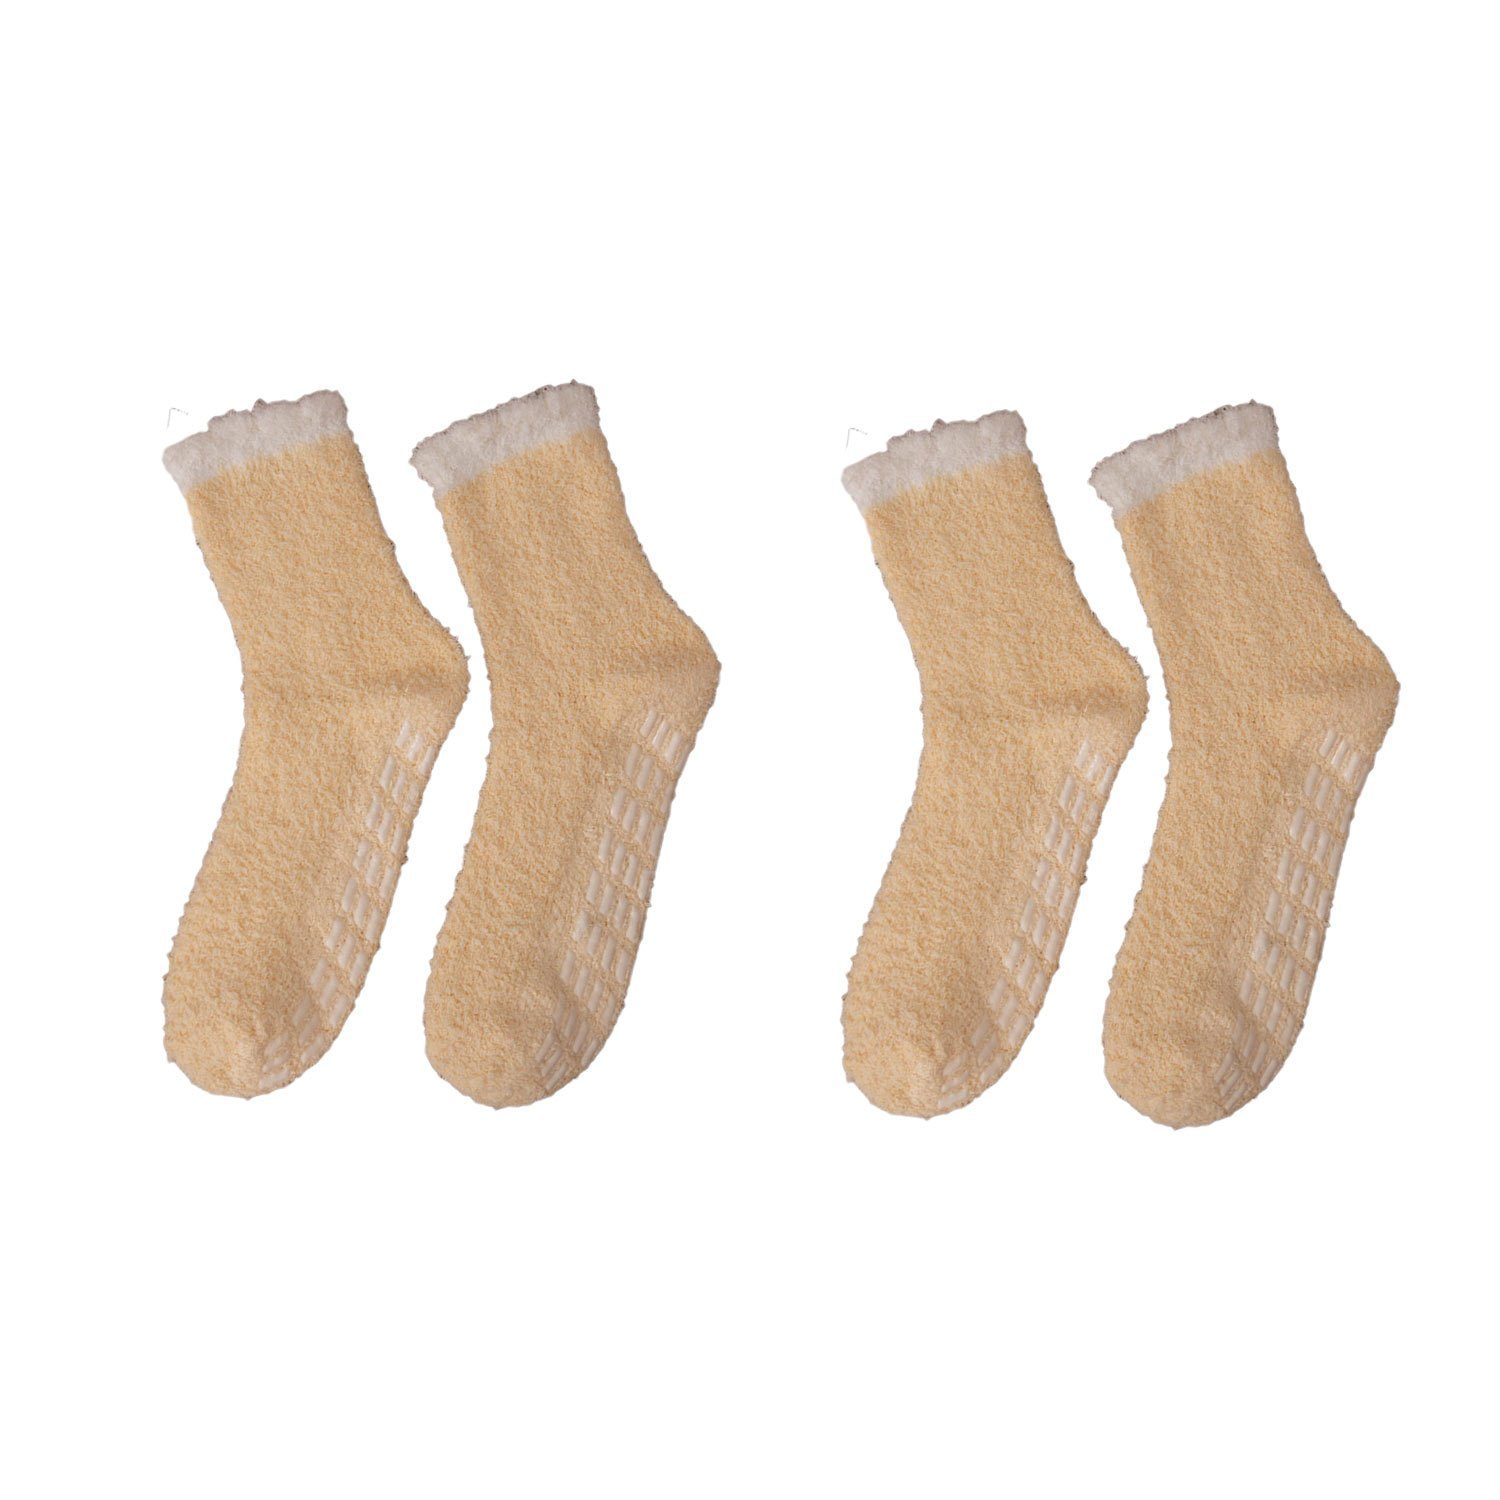 MAGICSHE Langsocken 2 Paare für Winter weiche flauschige Socken Rutschfeste und warme Fleece Socken hellgelb